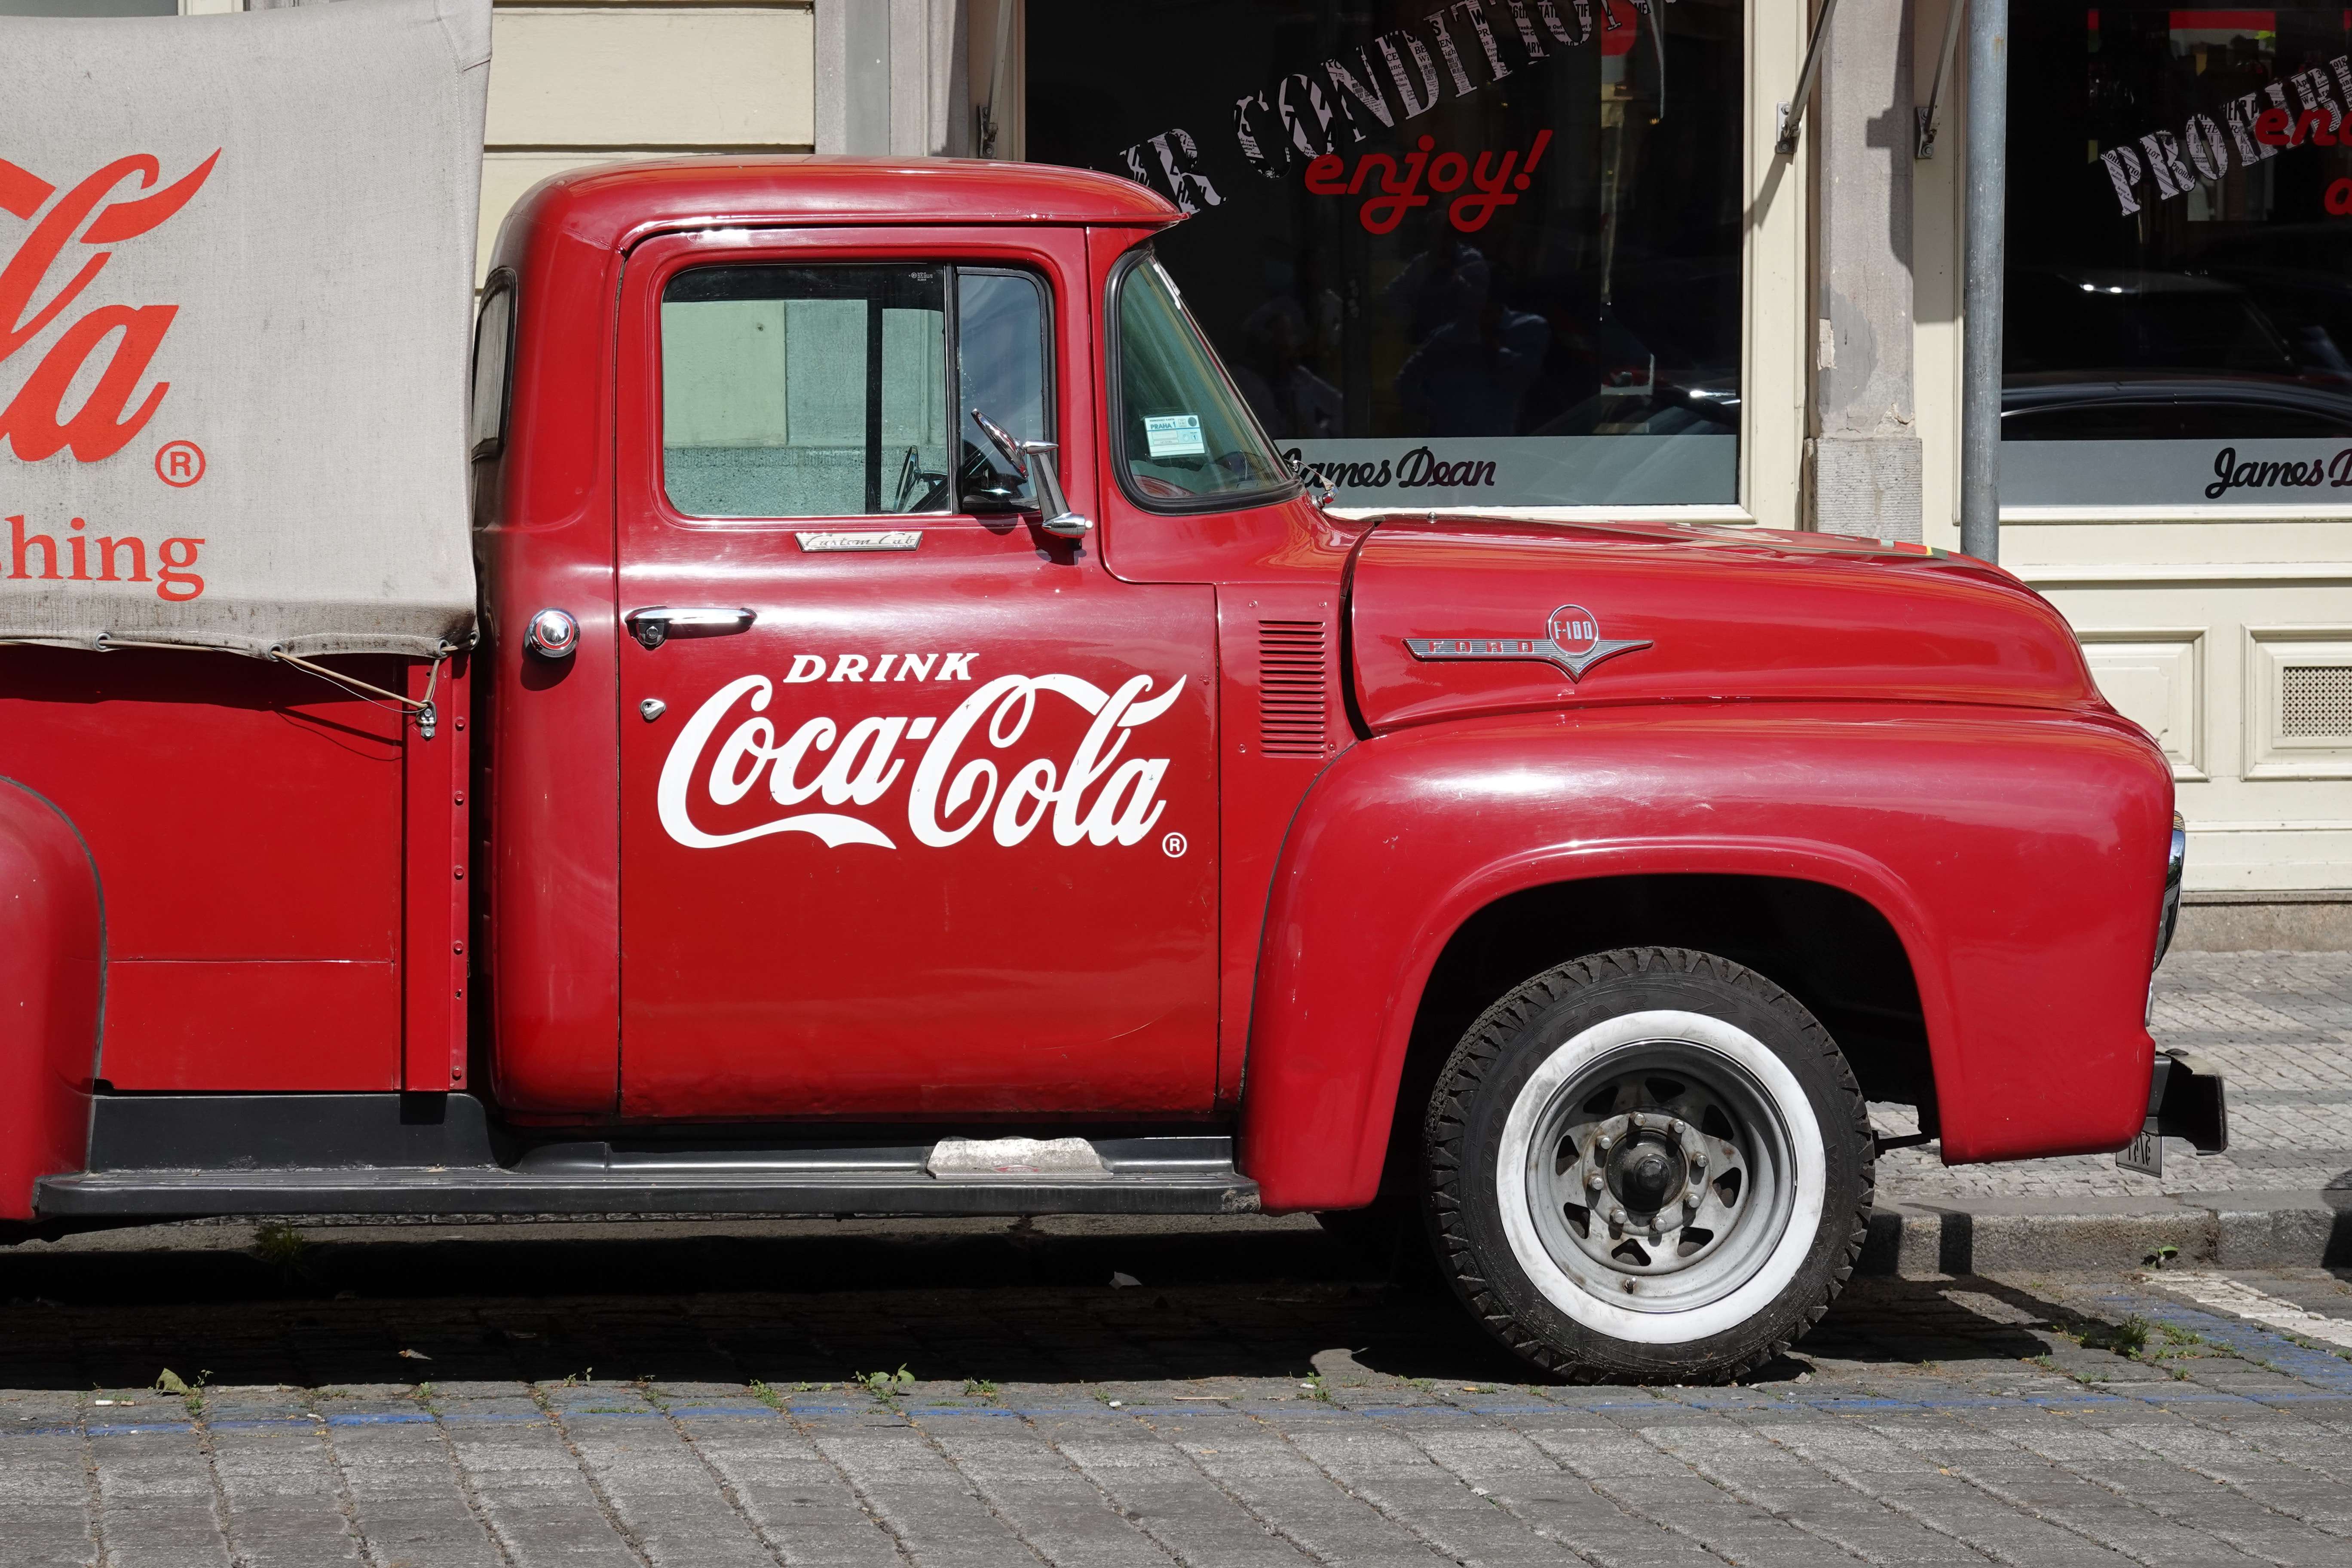 Coca cola distribution van